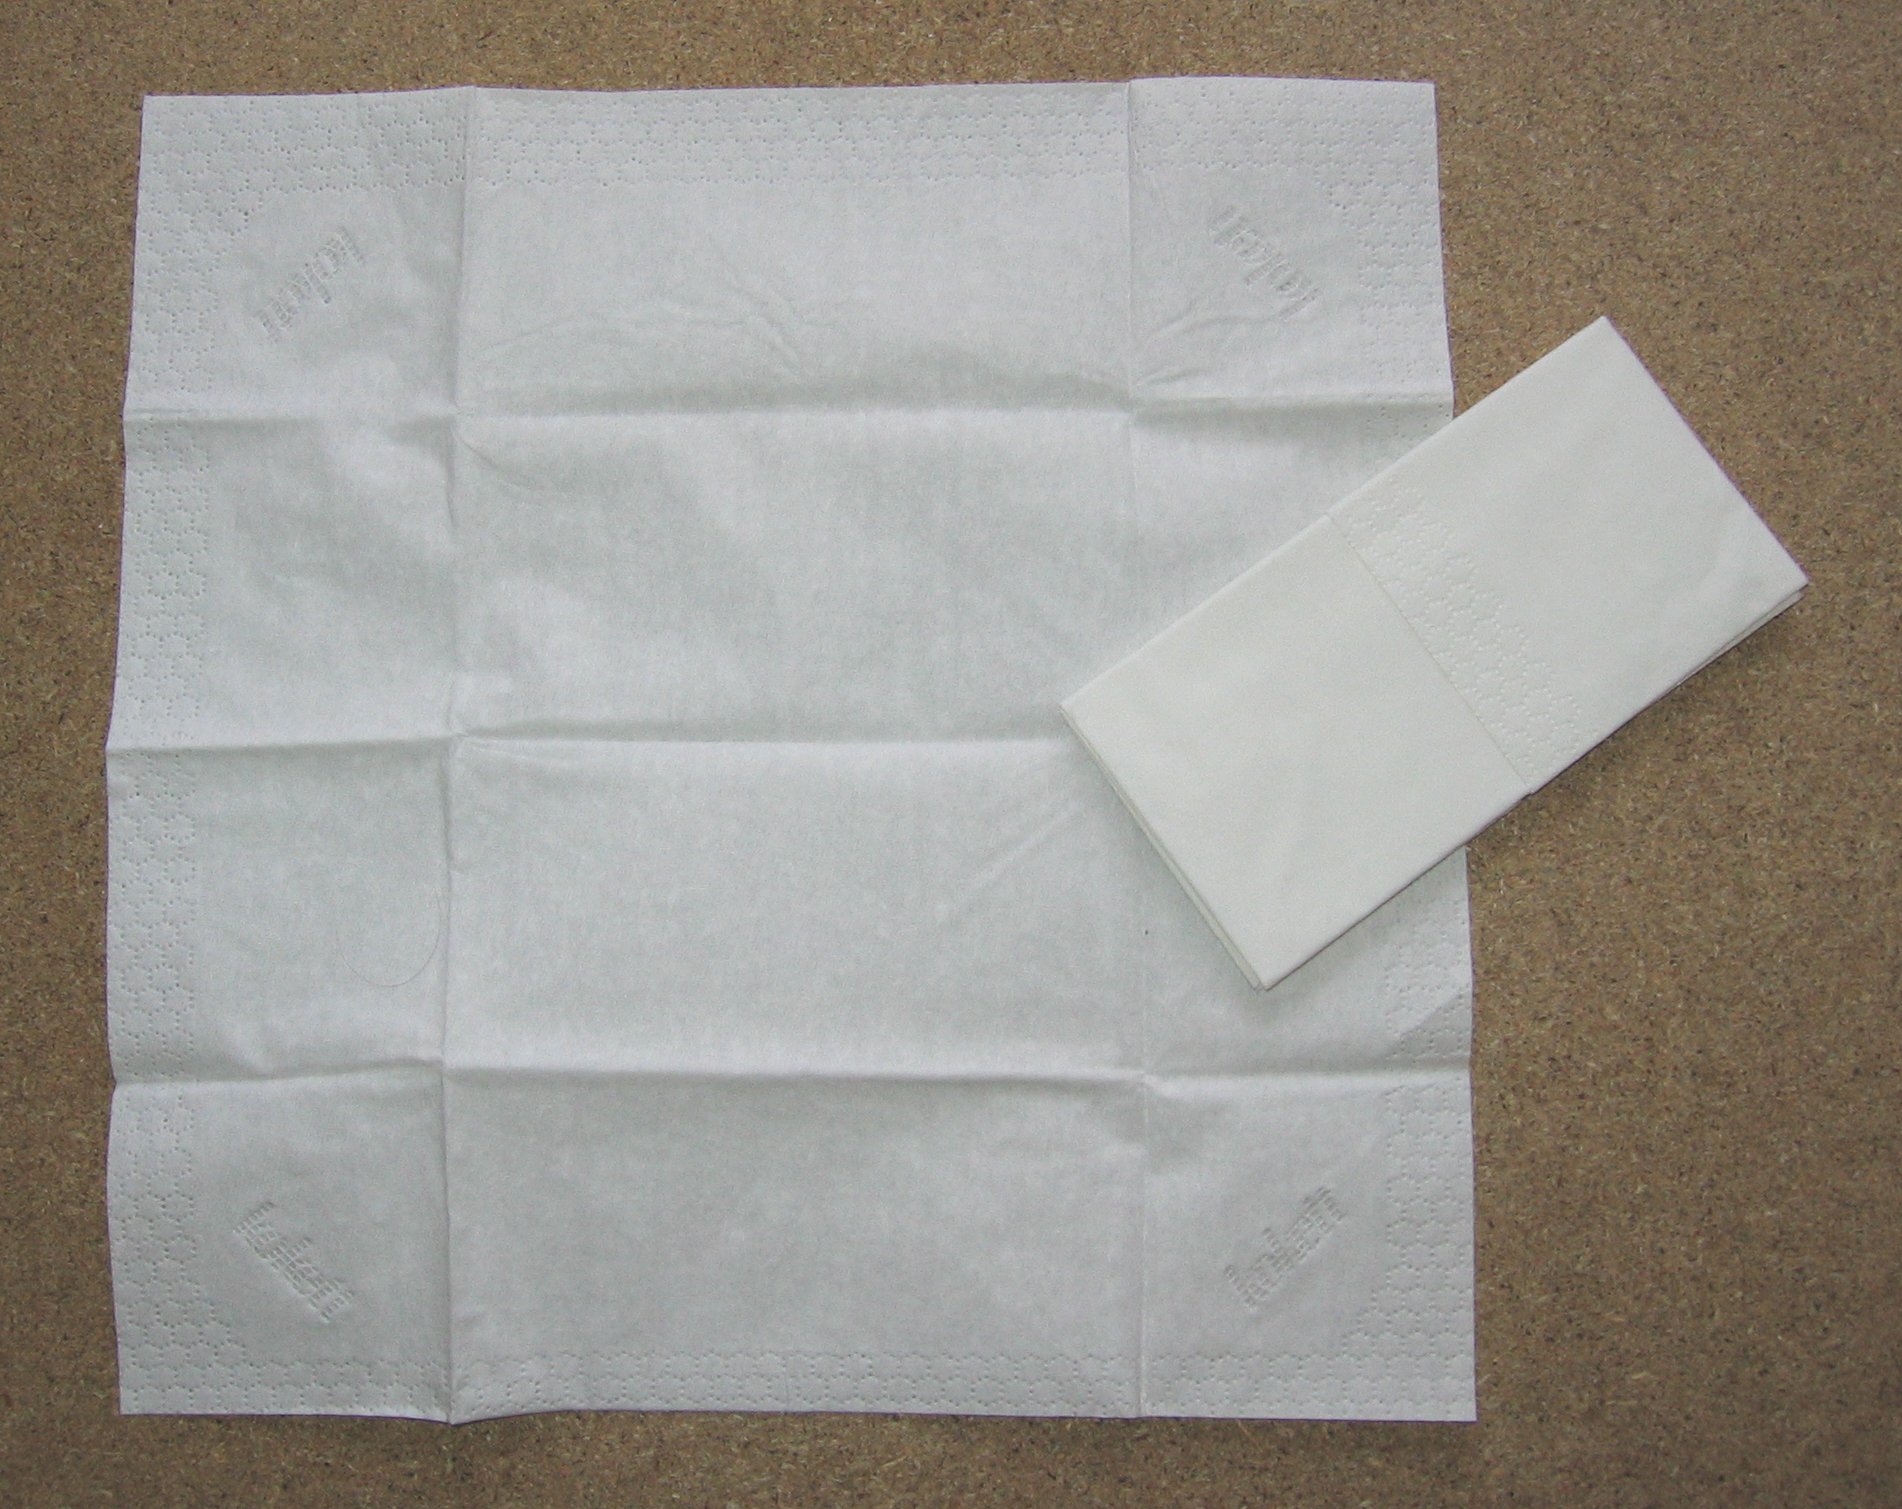 Tissue Paper - C- Fold Tissue Paper Manufacturer from Hyderabad